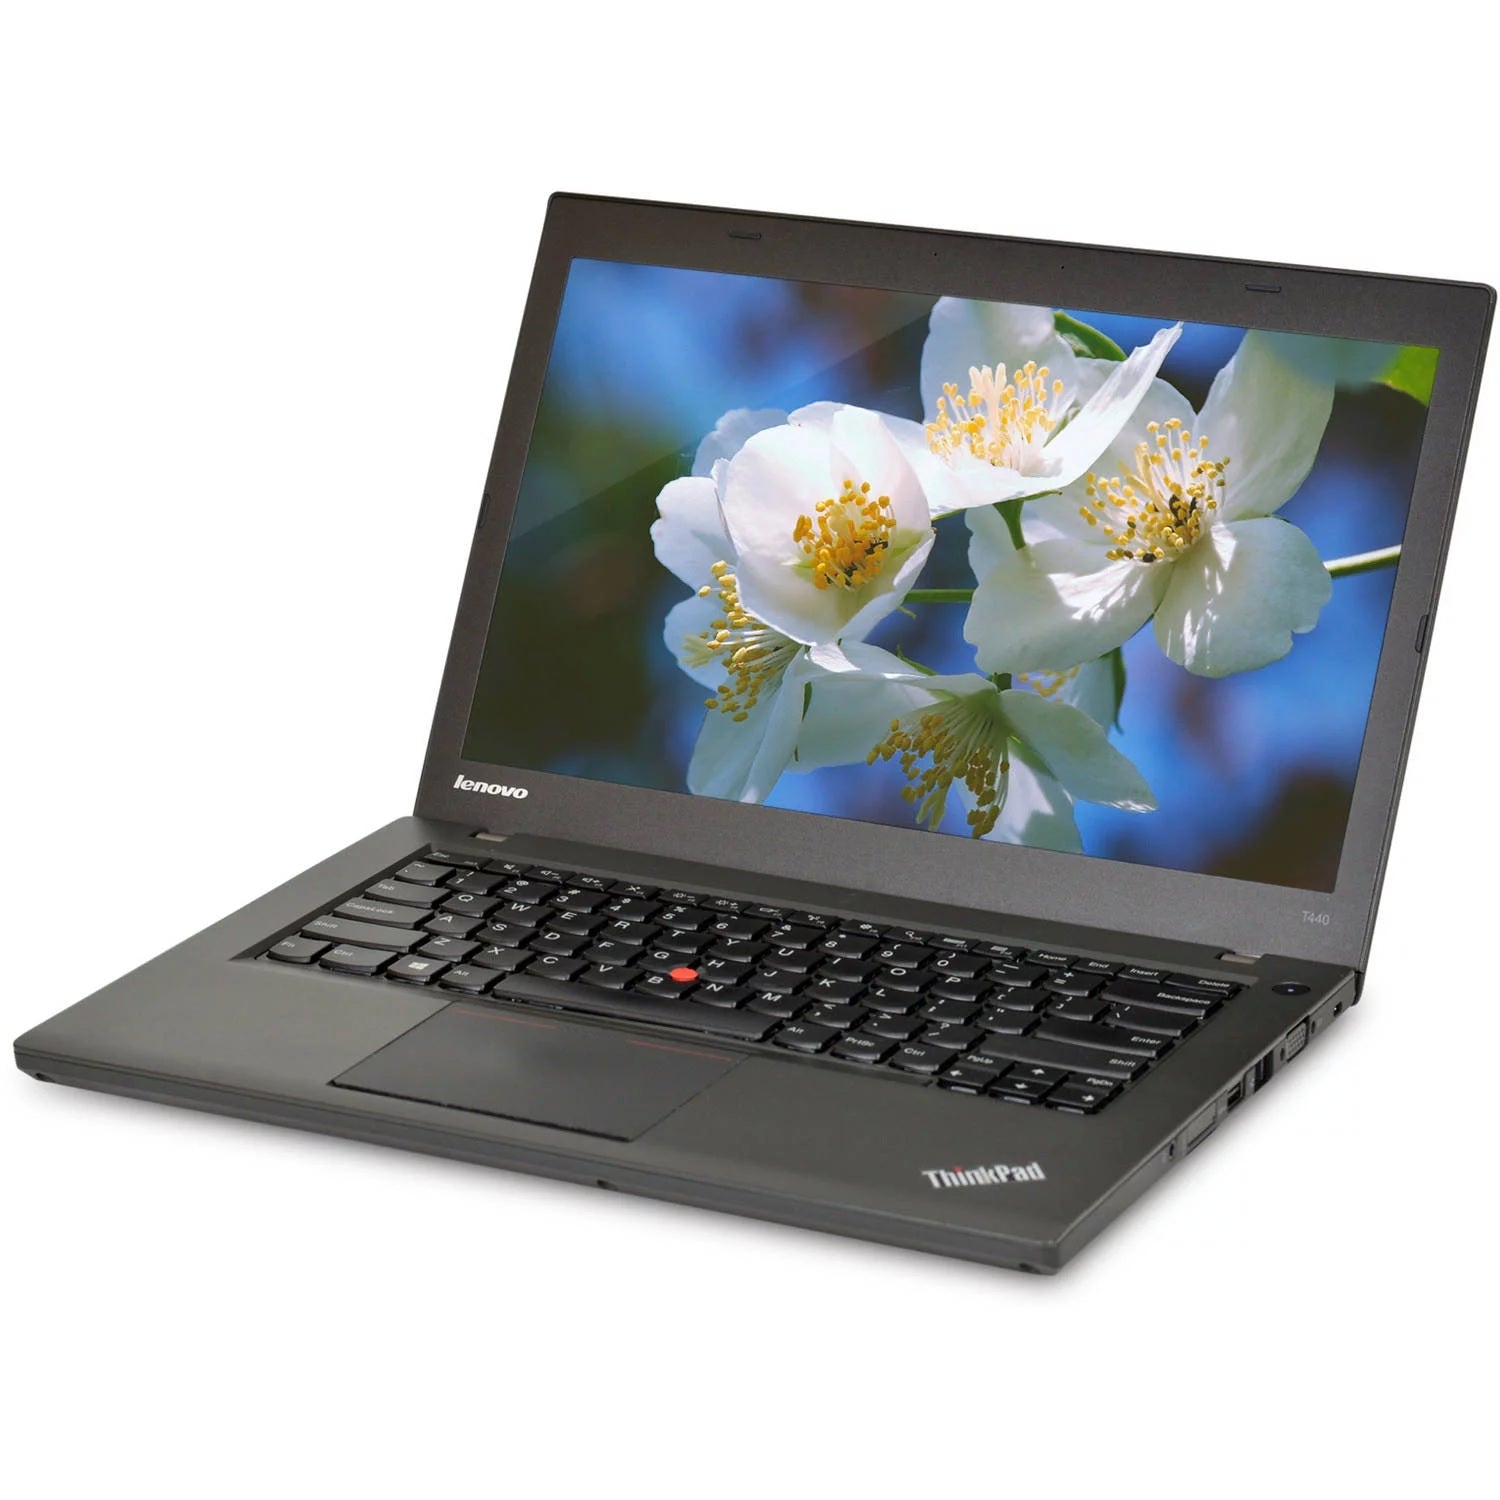 Lenovo ThinkPad T440 14inch Business Laptop Computer, Intel Core i5-4300U Up to 2.9GHz, 8GB RAM, 256GB SSD, Bluetooth, USB 3.0, Windows 10 Professional